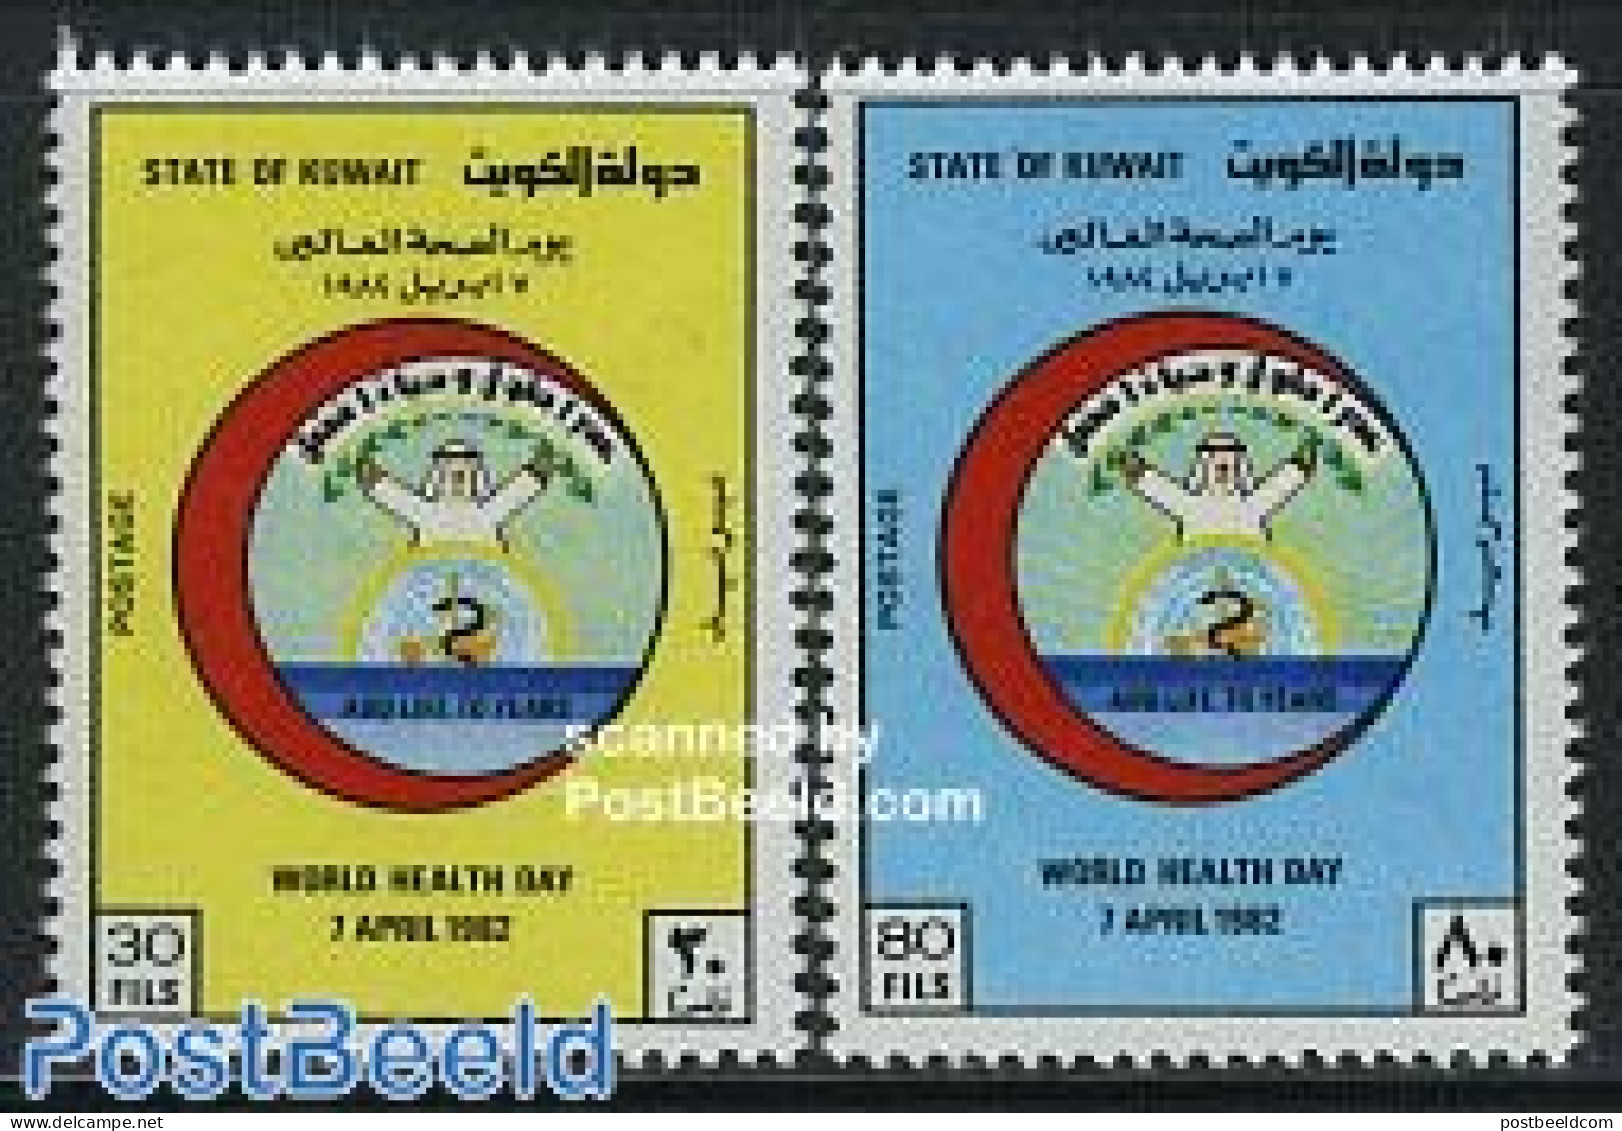 Kuwait 1982 World Health Day 2v, Mint NH, Health - Health - Red Cross - Rotes Kreuz